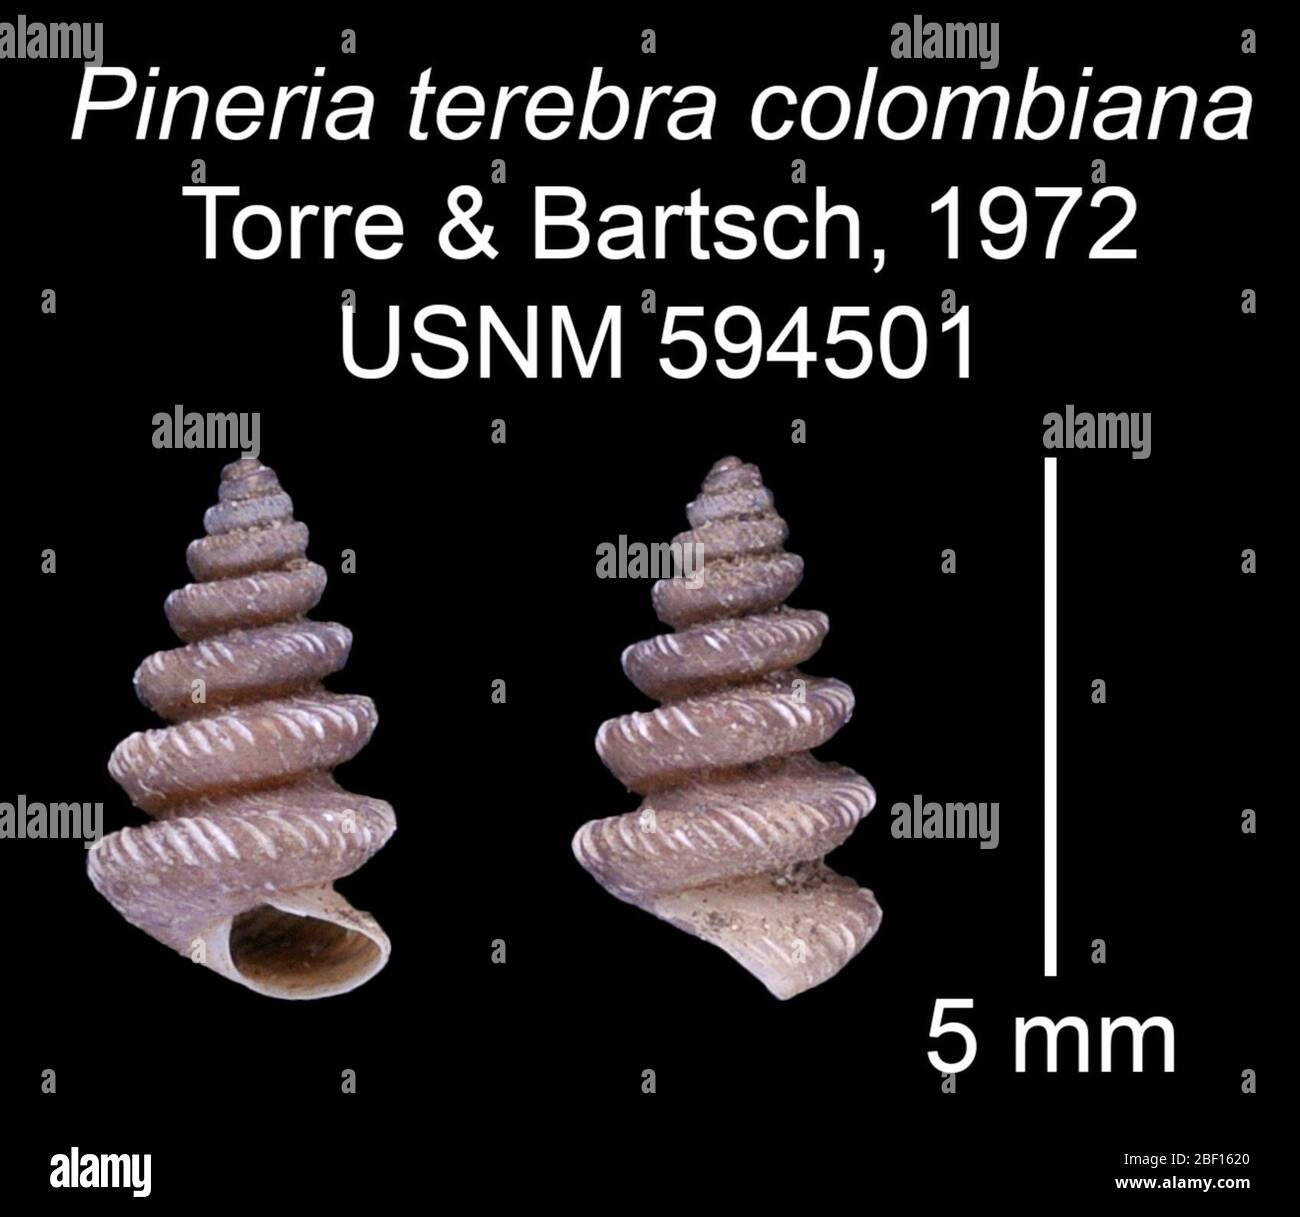 Pineria terebra colombiana. Figured Type20 Jan 20161 Stock Photo